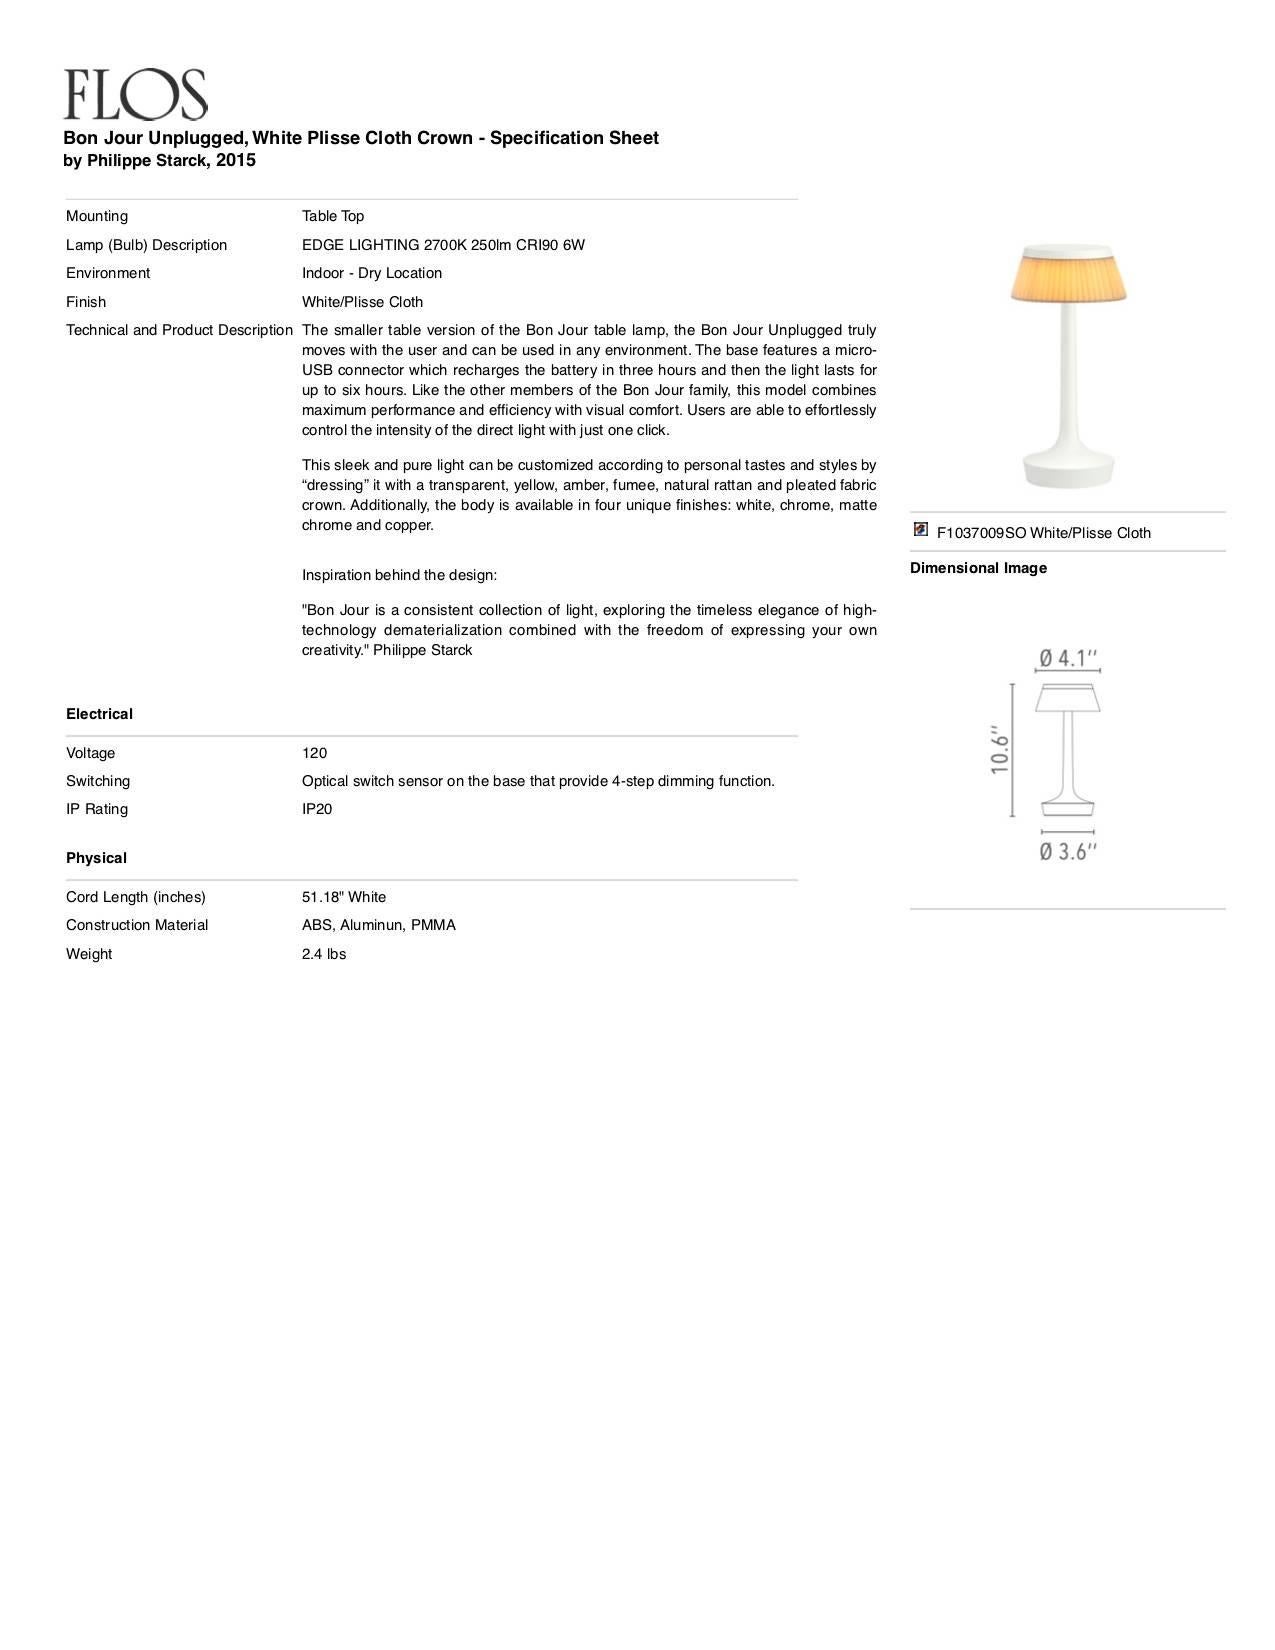 Lámpara FLOS Bon Jour Unplugged Blanca c/ Corona de tela Plisse de Philippe Starck Italiano en venta